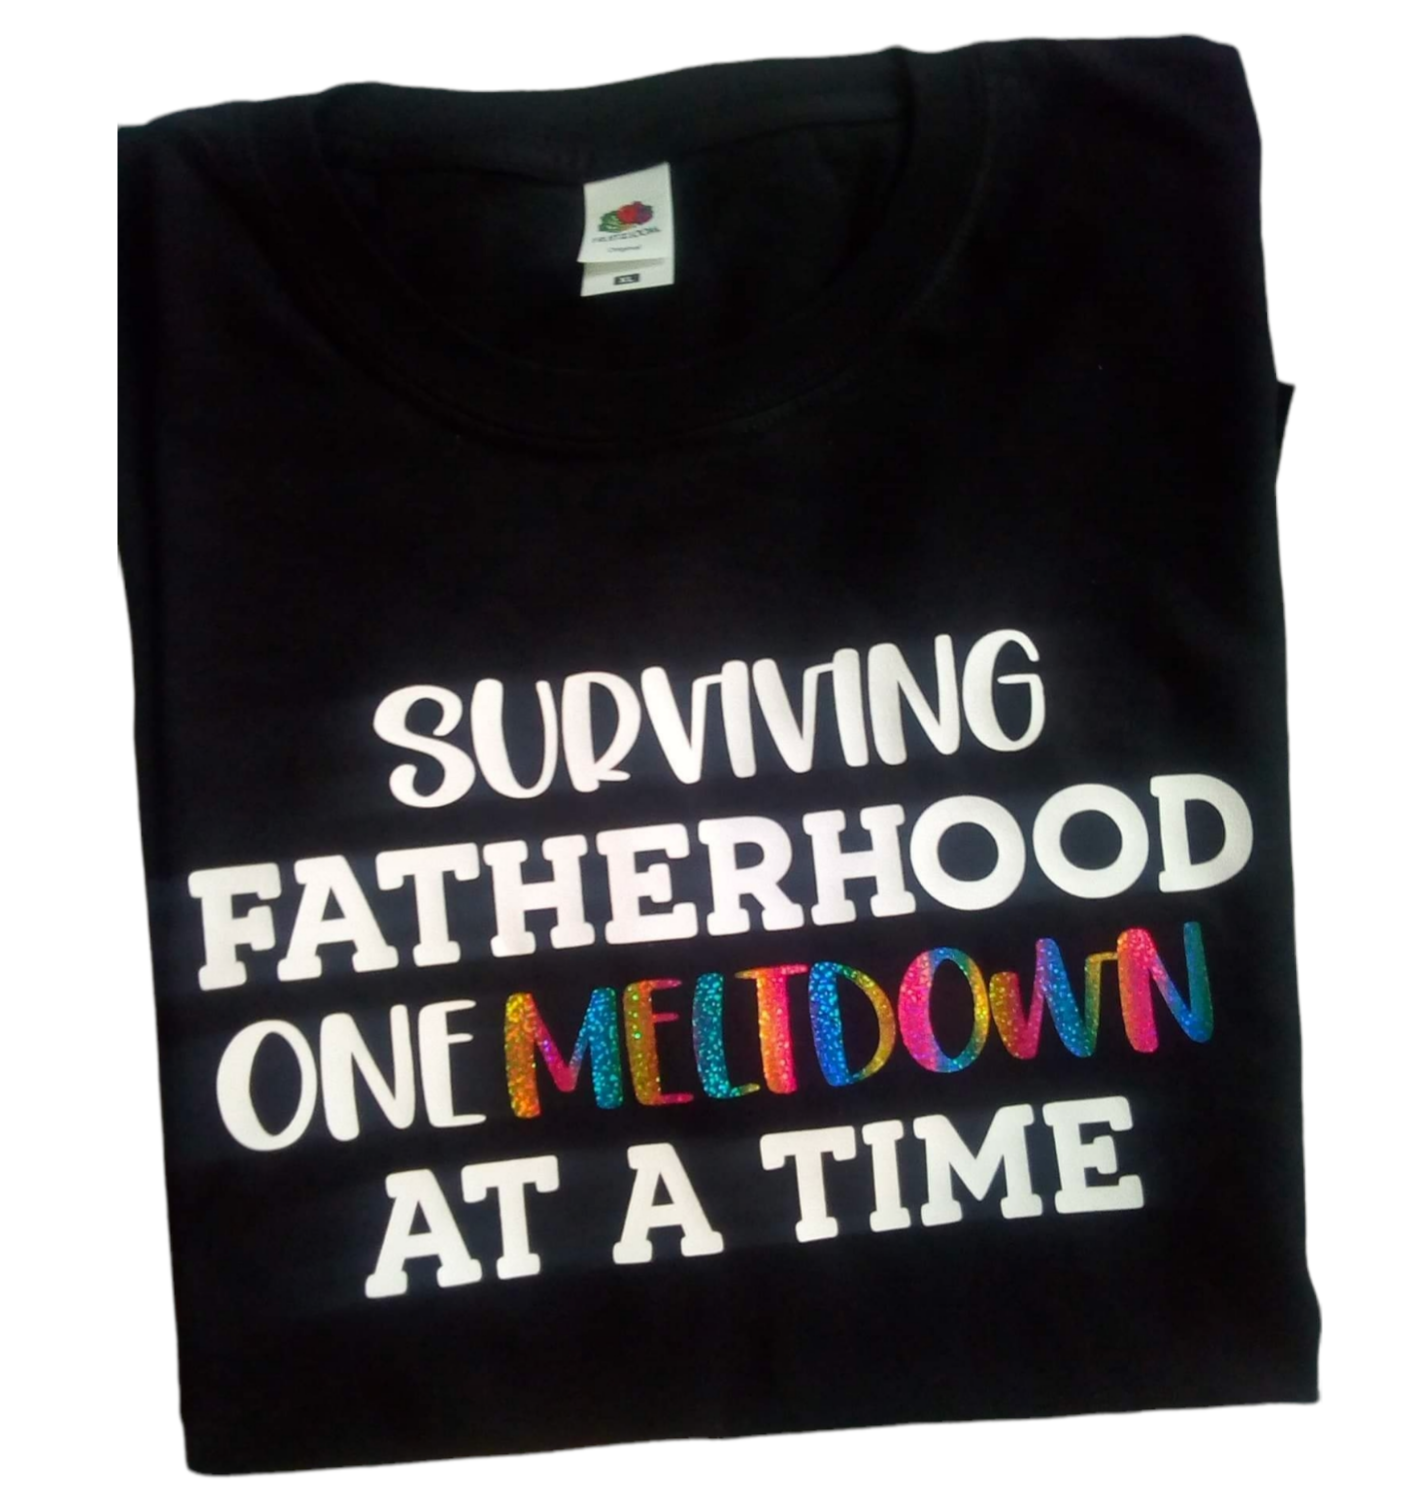 Surviving fatherhood